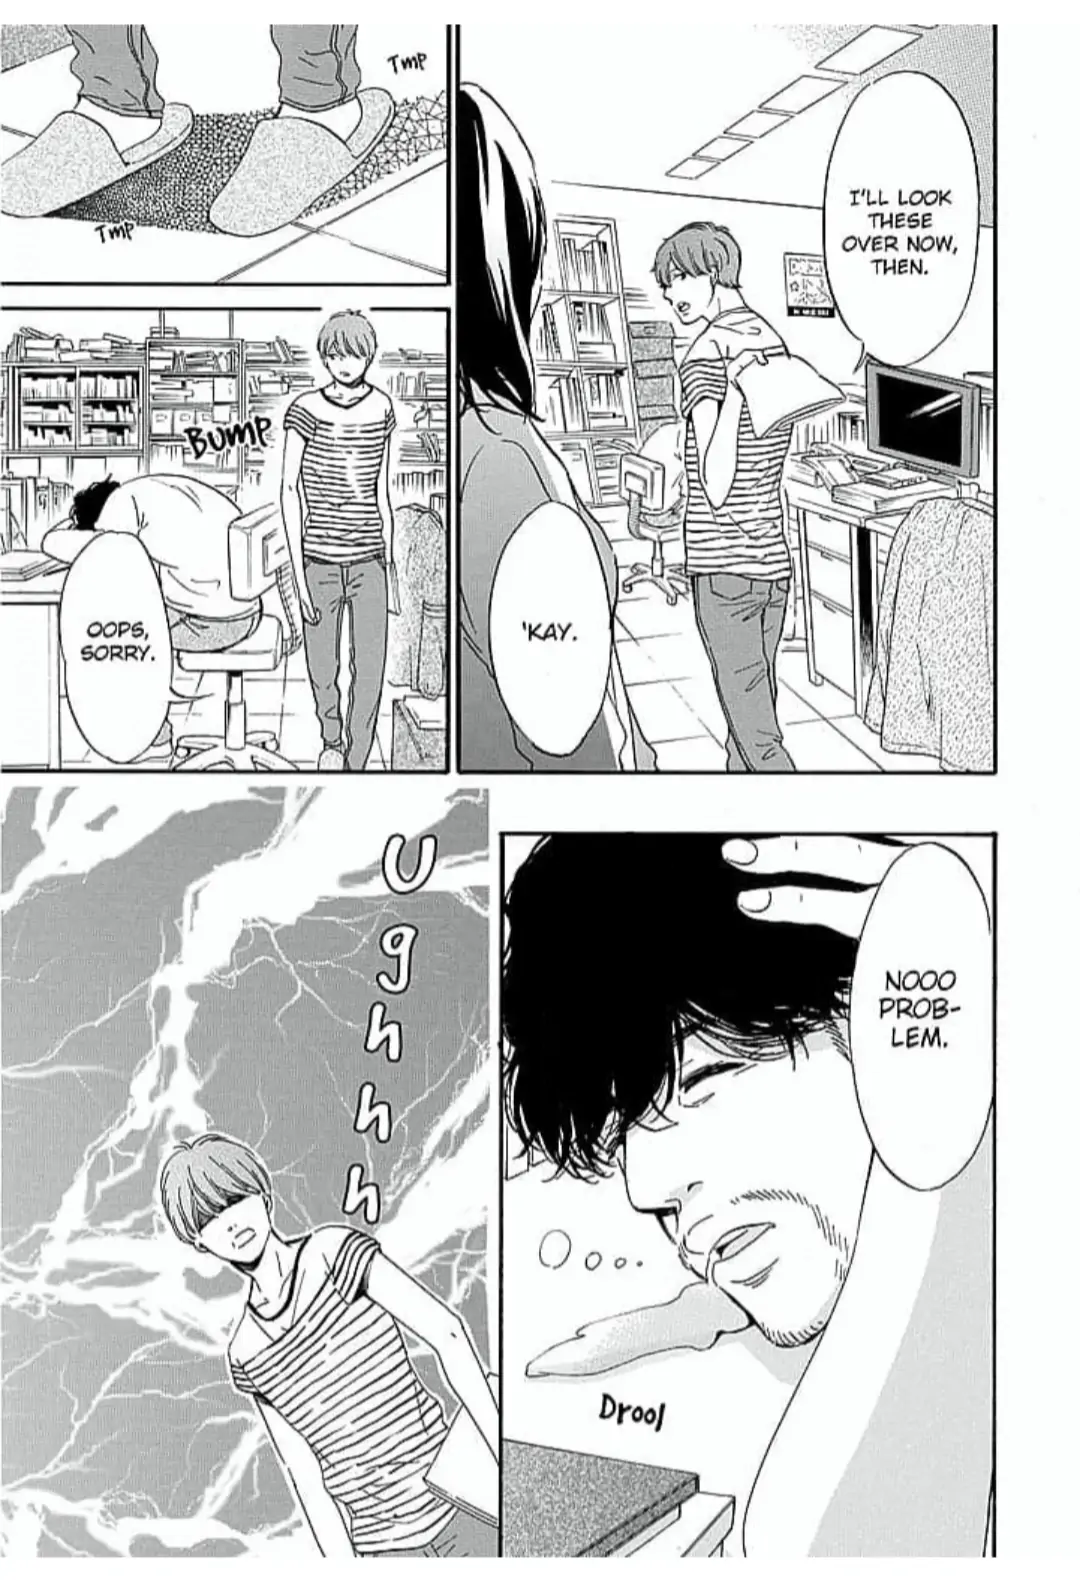 Nishiogikubo Run Through chapter 6 - page 25